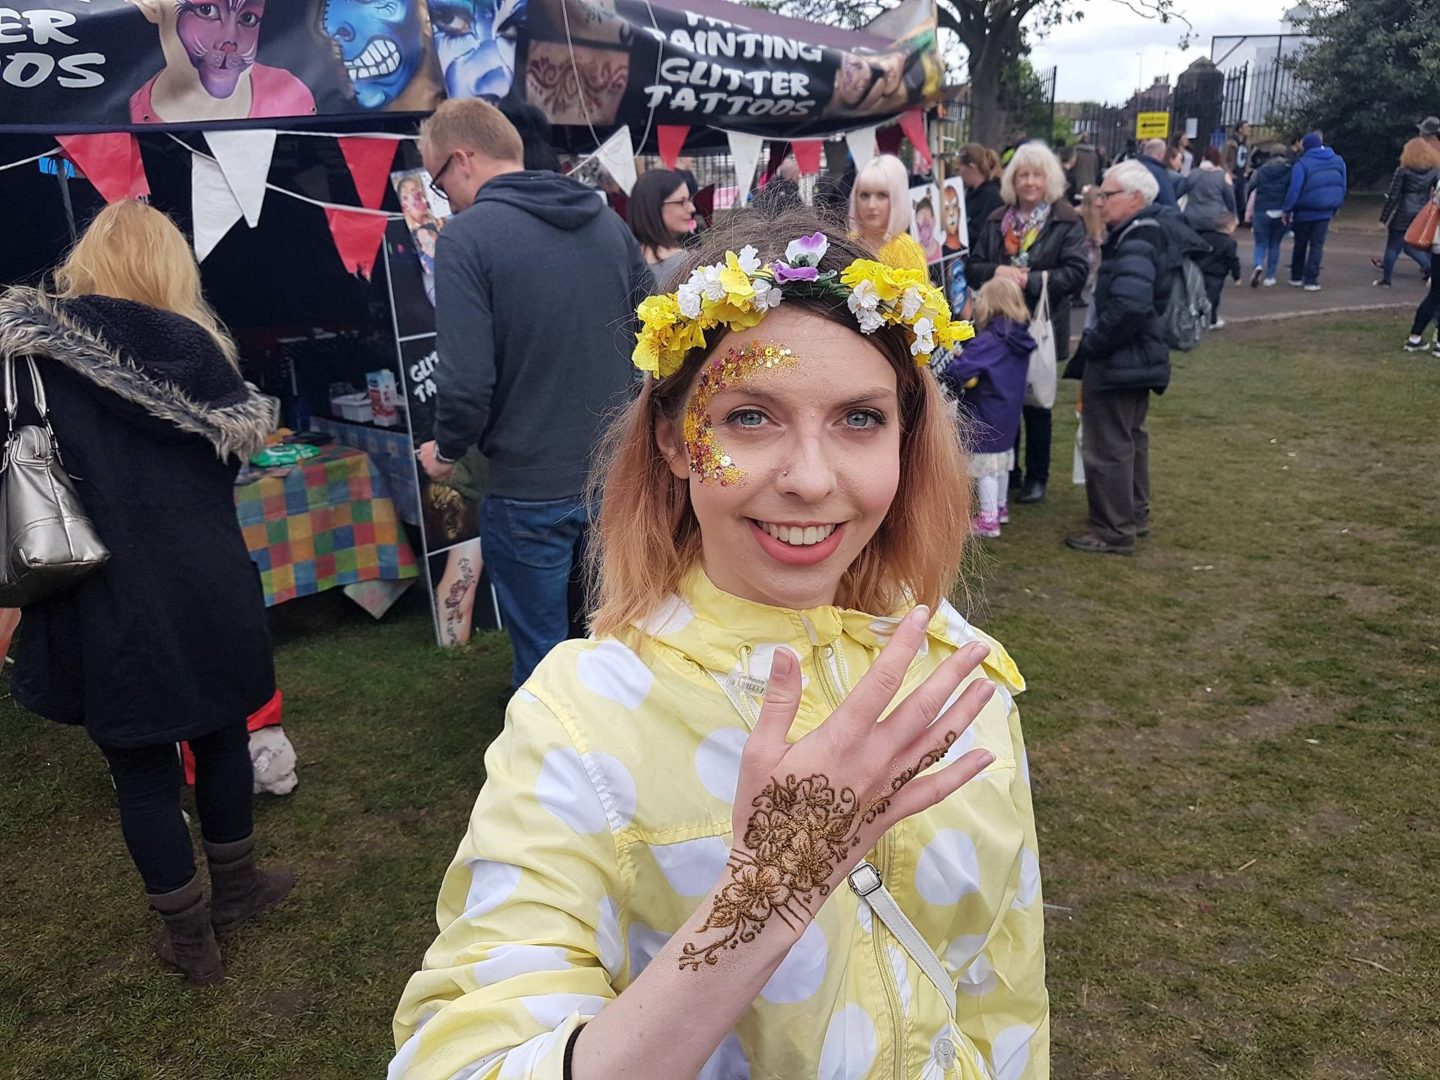 Henna and glitter eye - getting in the festival spirit!